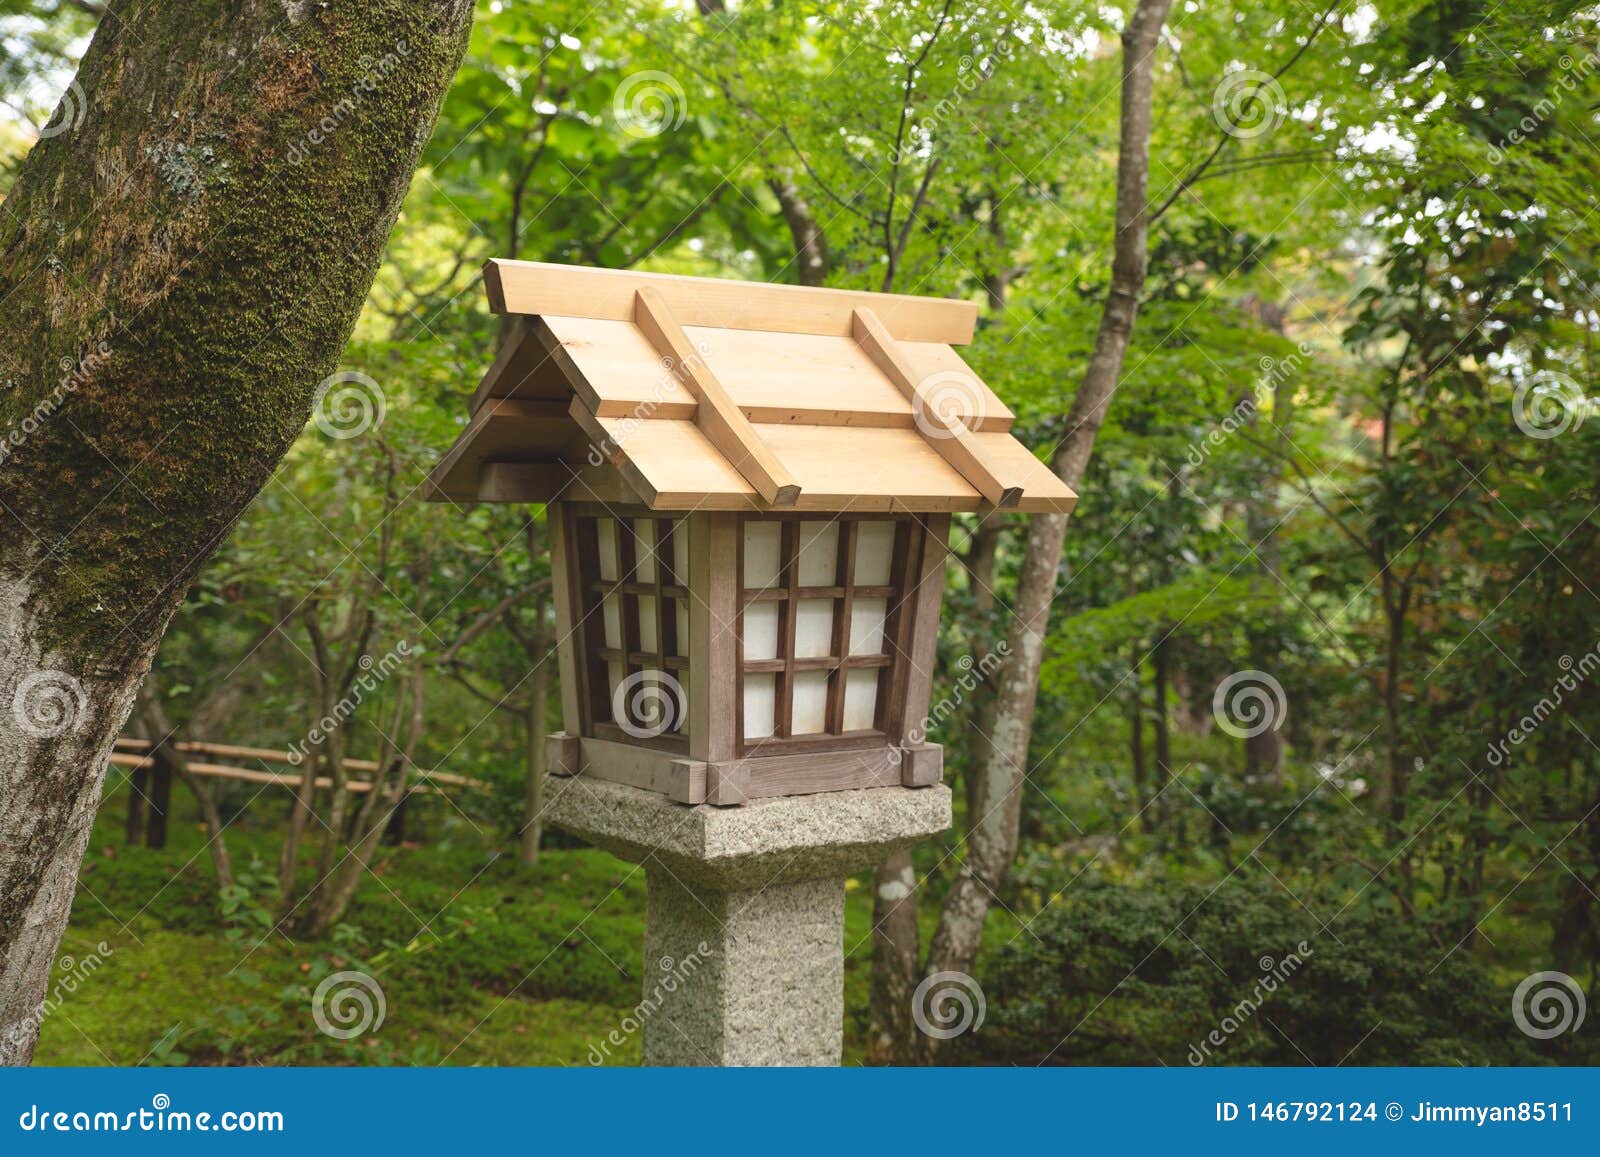 Japanese wooden lantern stock photo. Image of wooden - 146792124